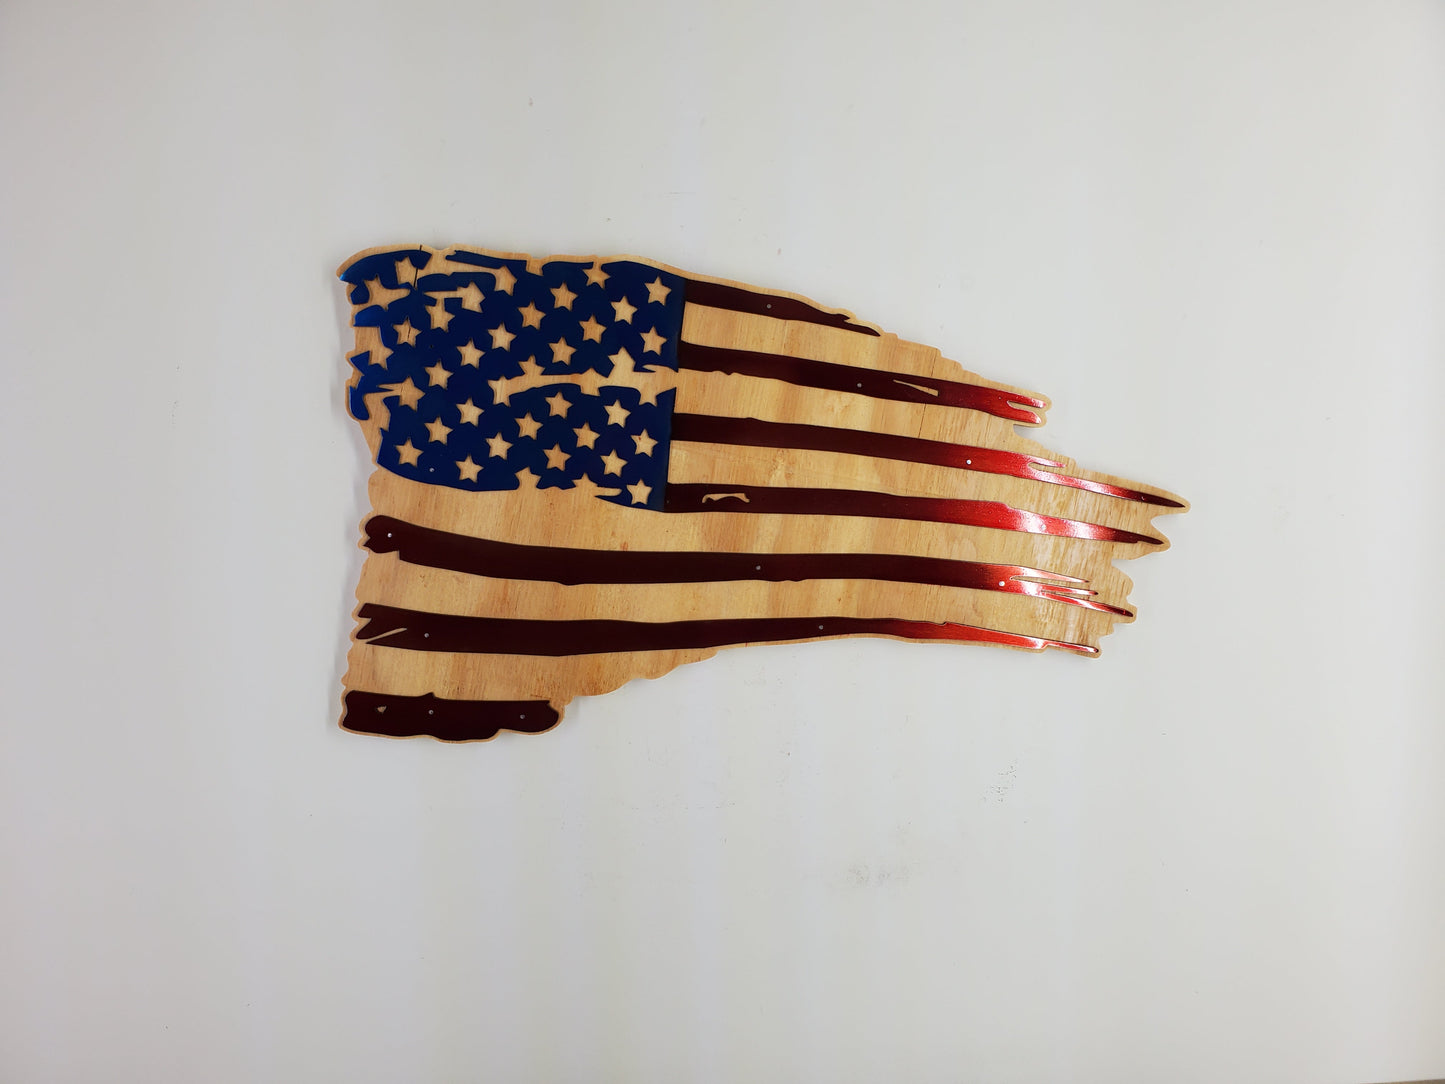 Tattered American Flag Metal Art on Wood